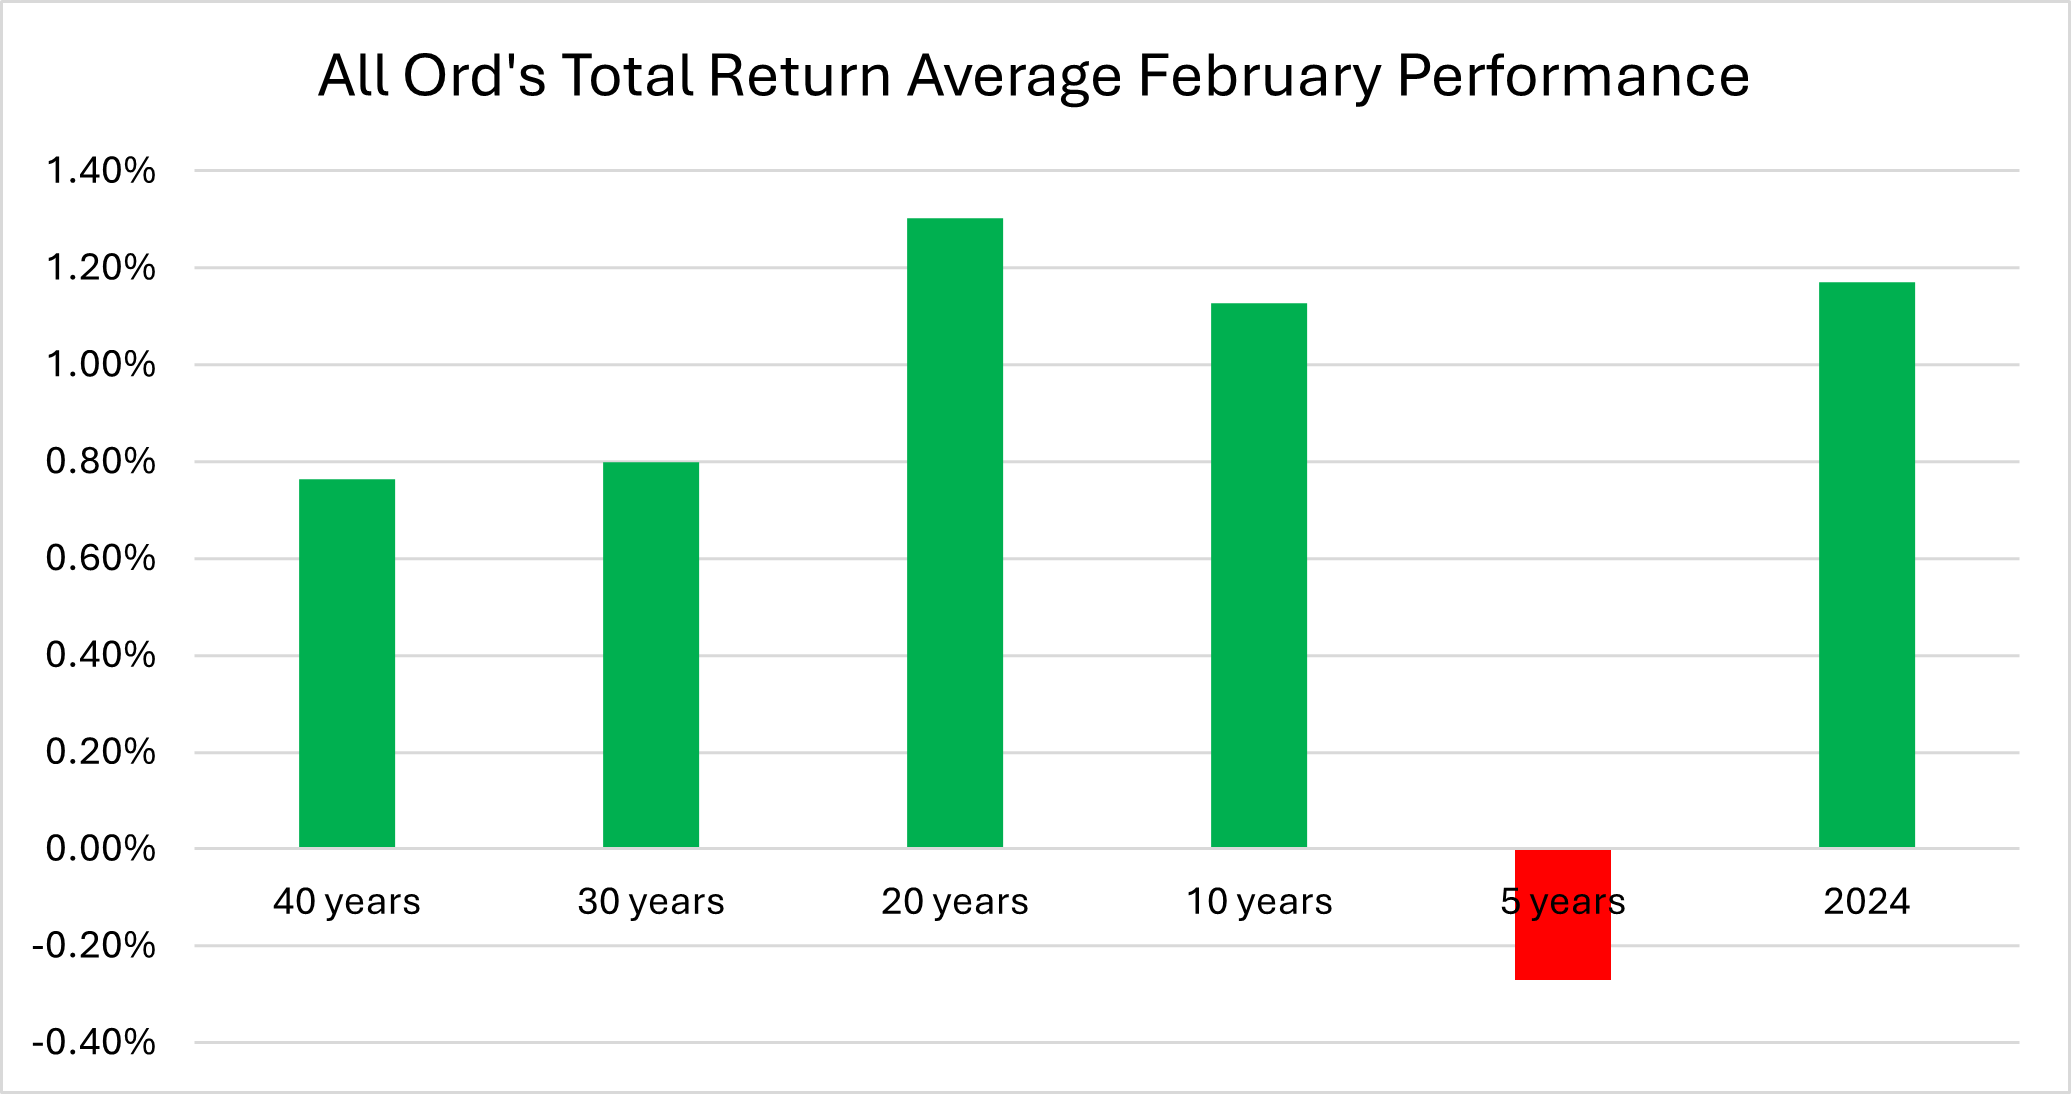 2. All Ords Total Return February Performance